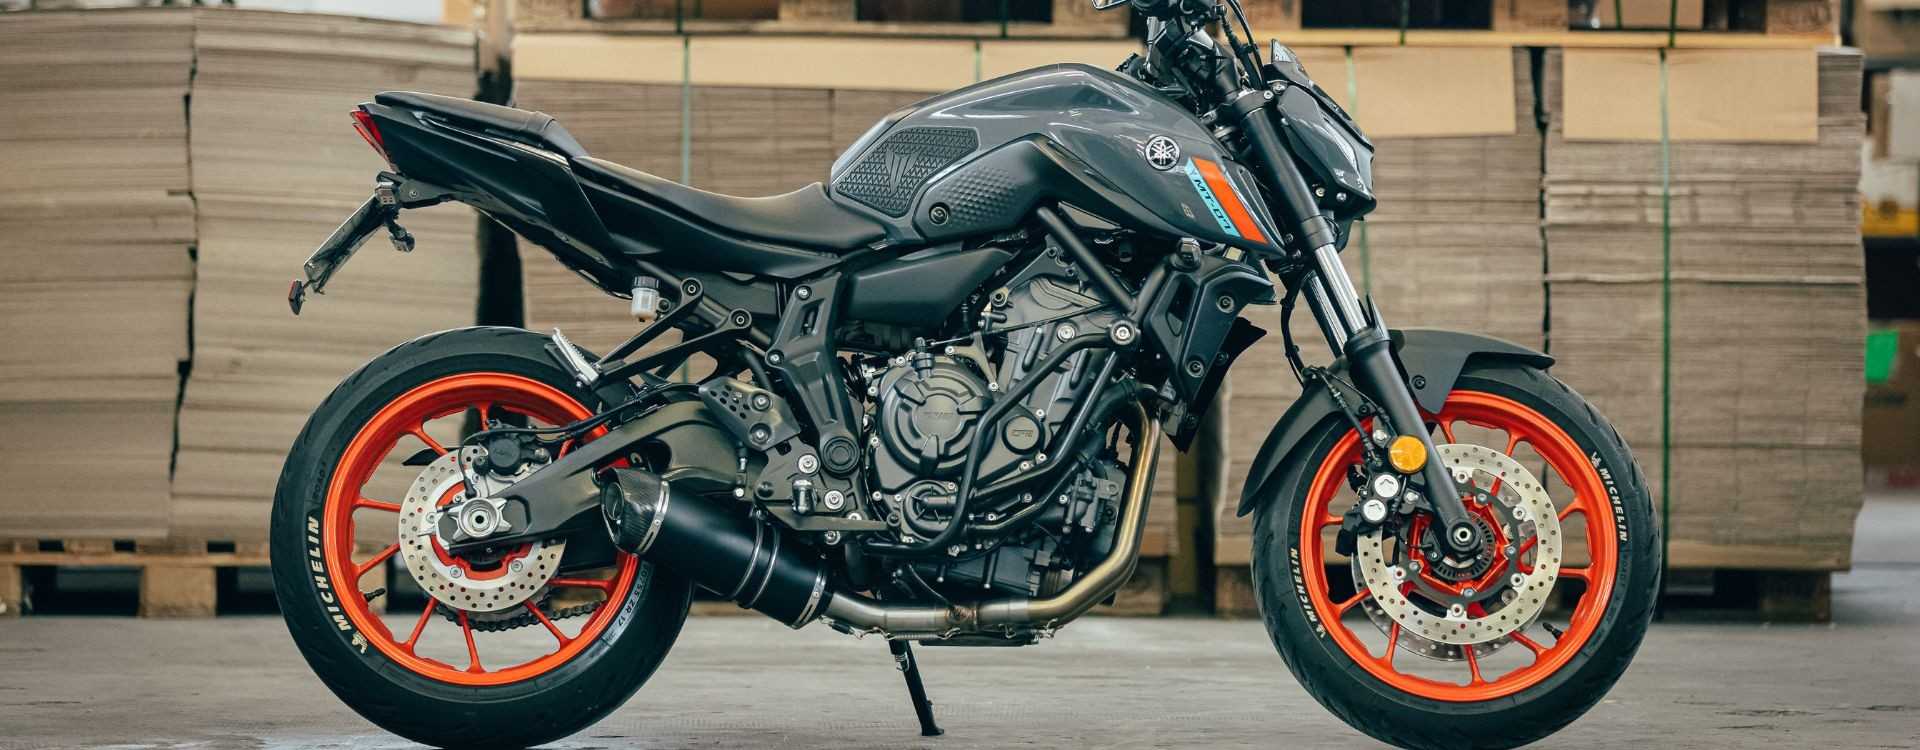 Yamaha MT-07 2021: La moto naked con un carácter indomable